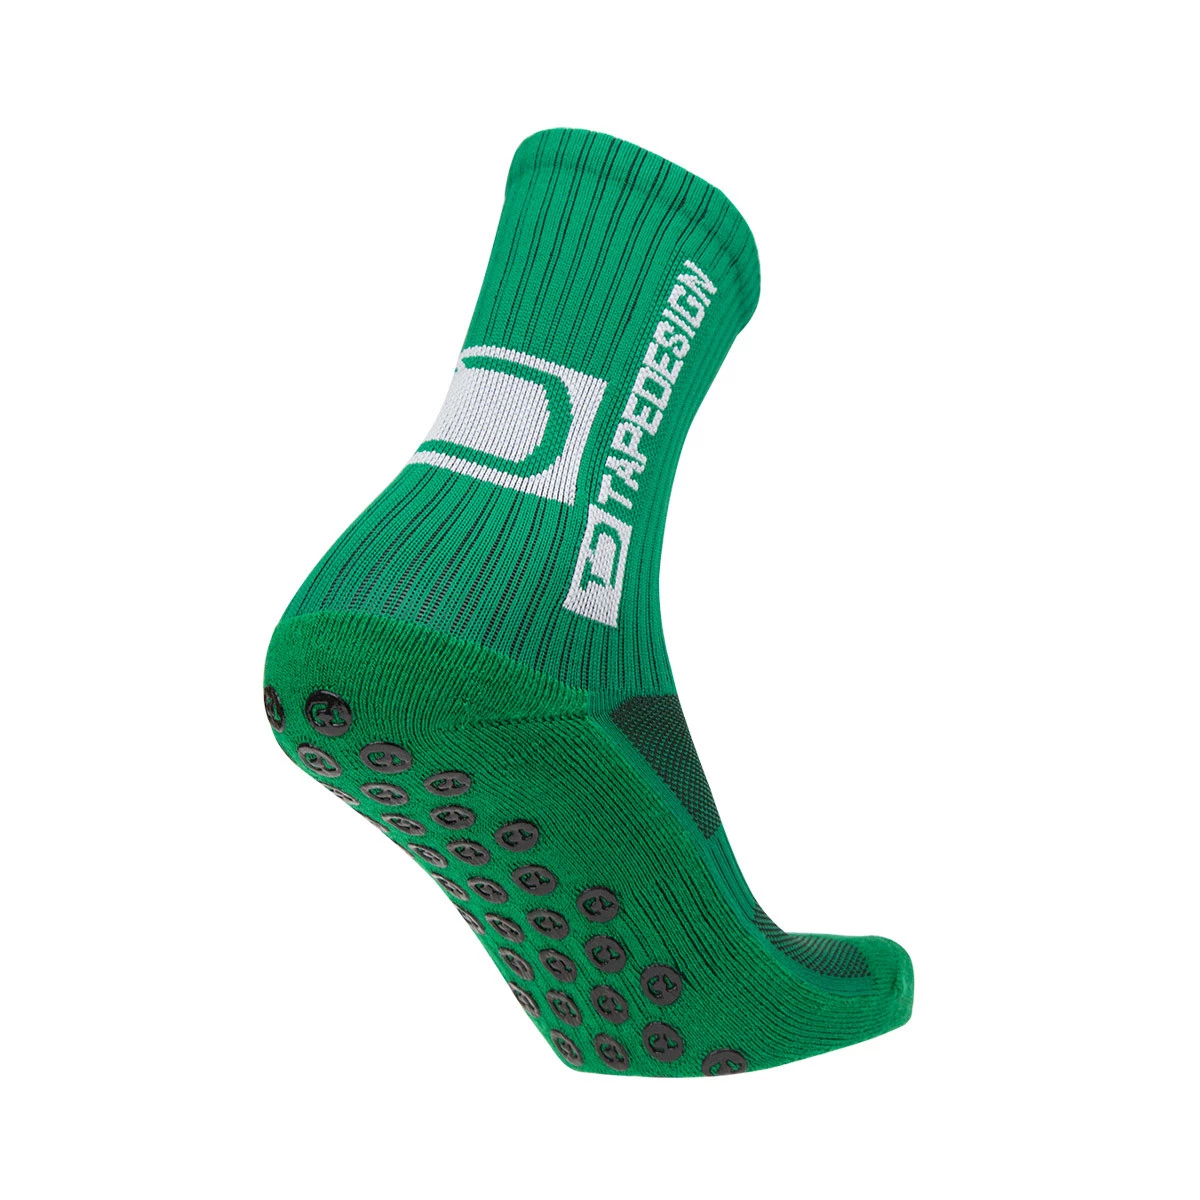 Calcetines de fútbol diseño 6325 - 3011 (verde oscuro) - SD MED